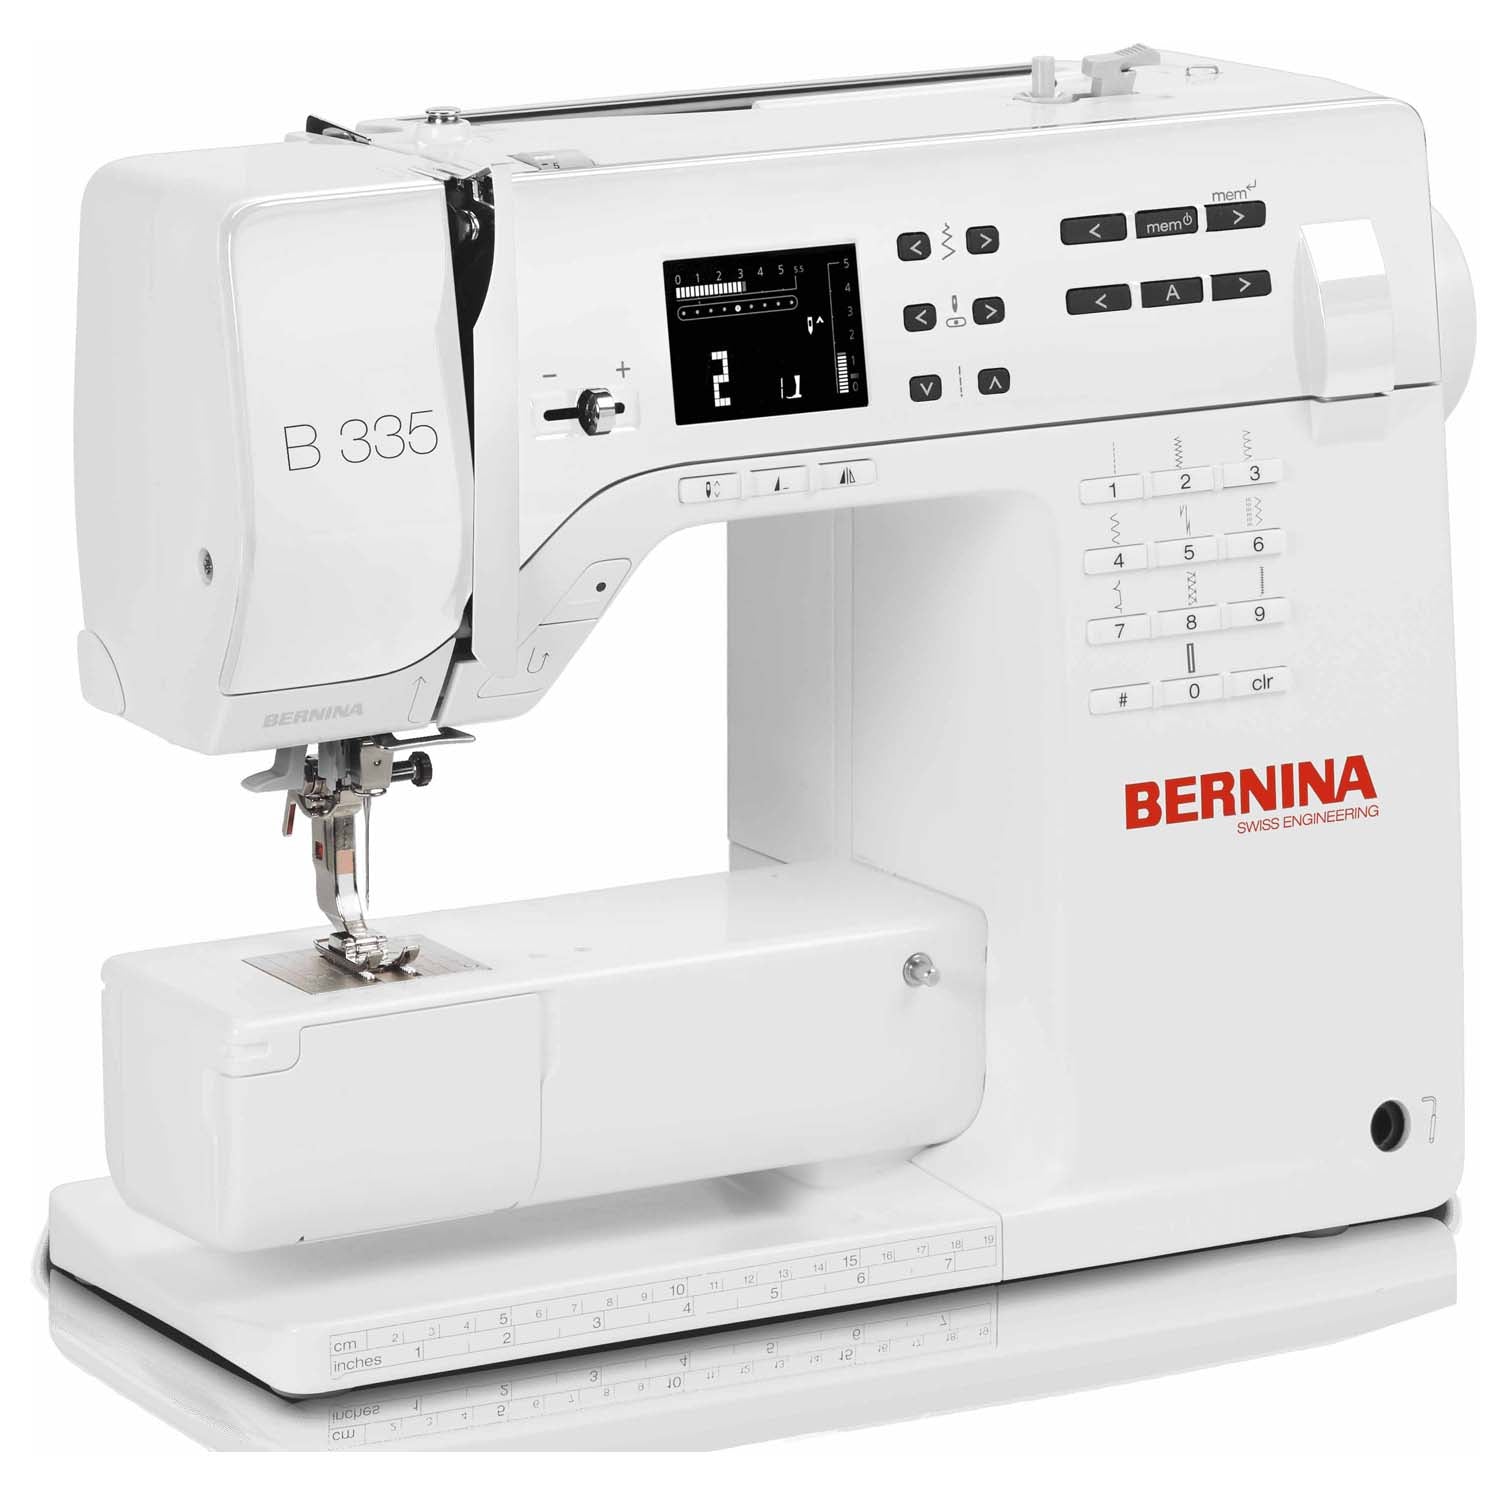 BERNINA 335 Sewing Machine